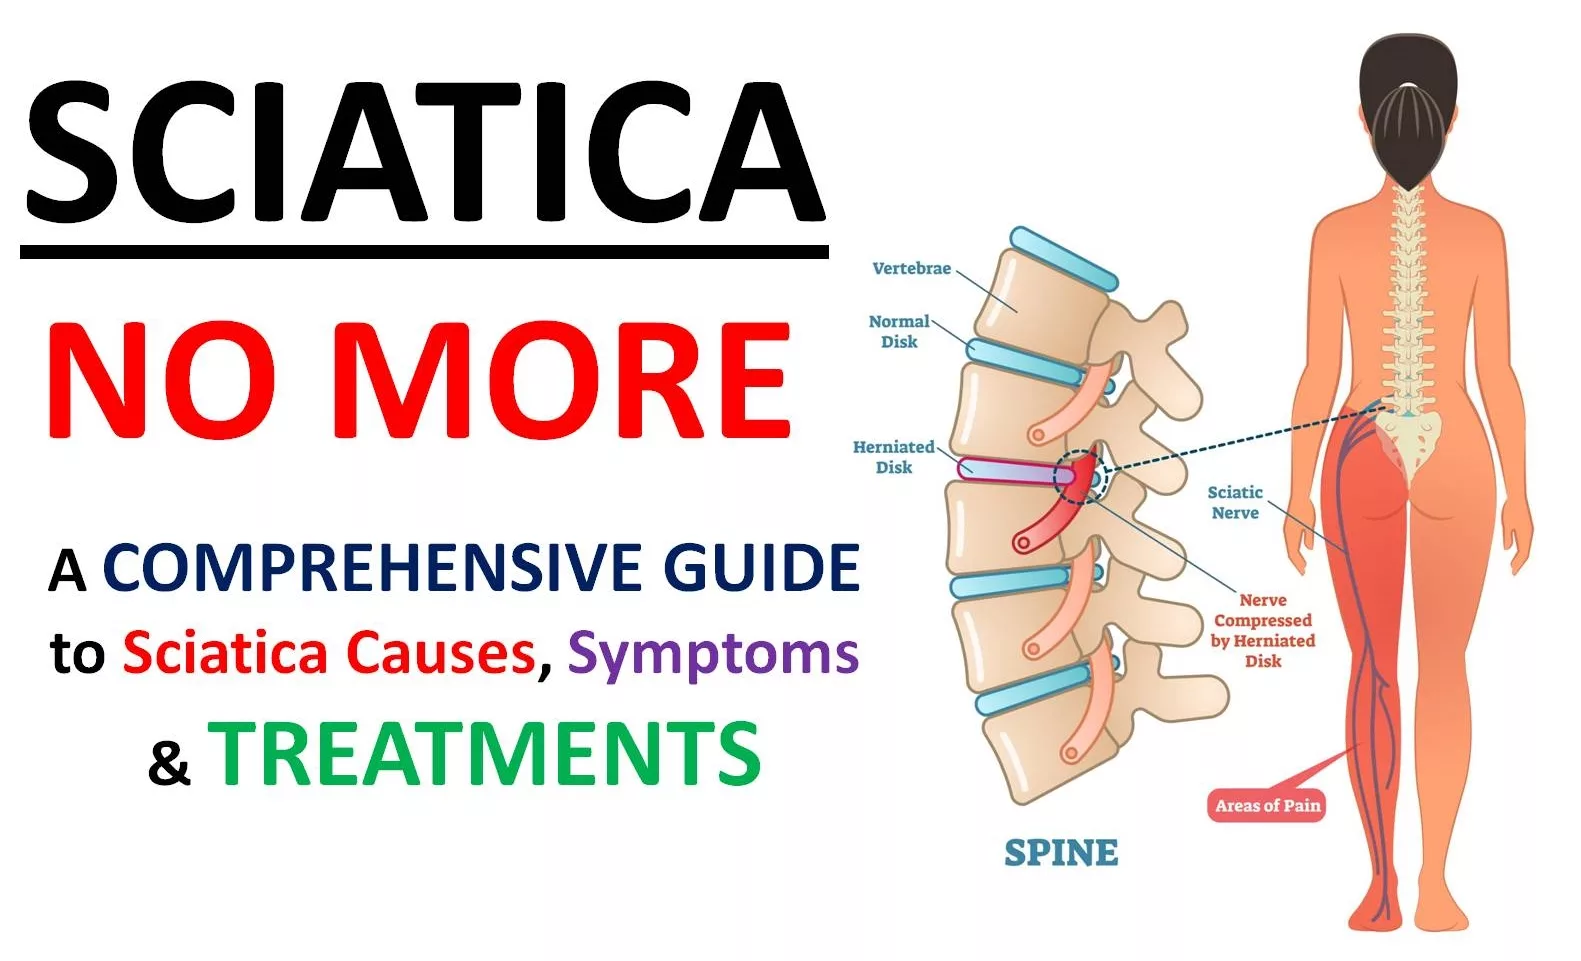 Sciatica: Symptoms and causes of sciatic nerve pain